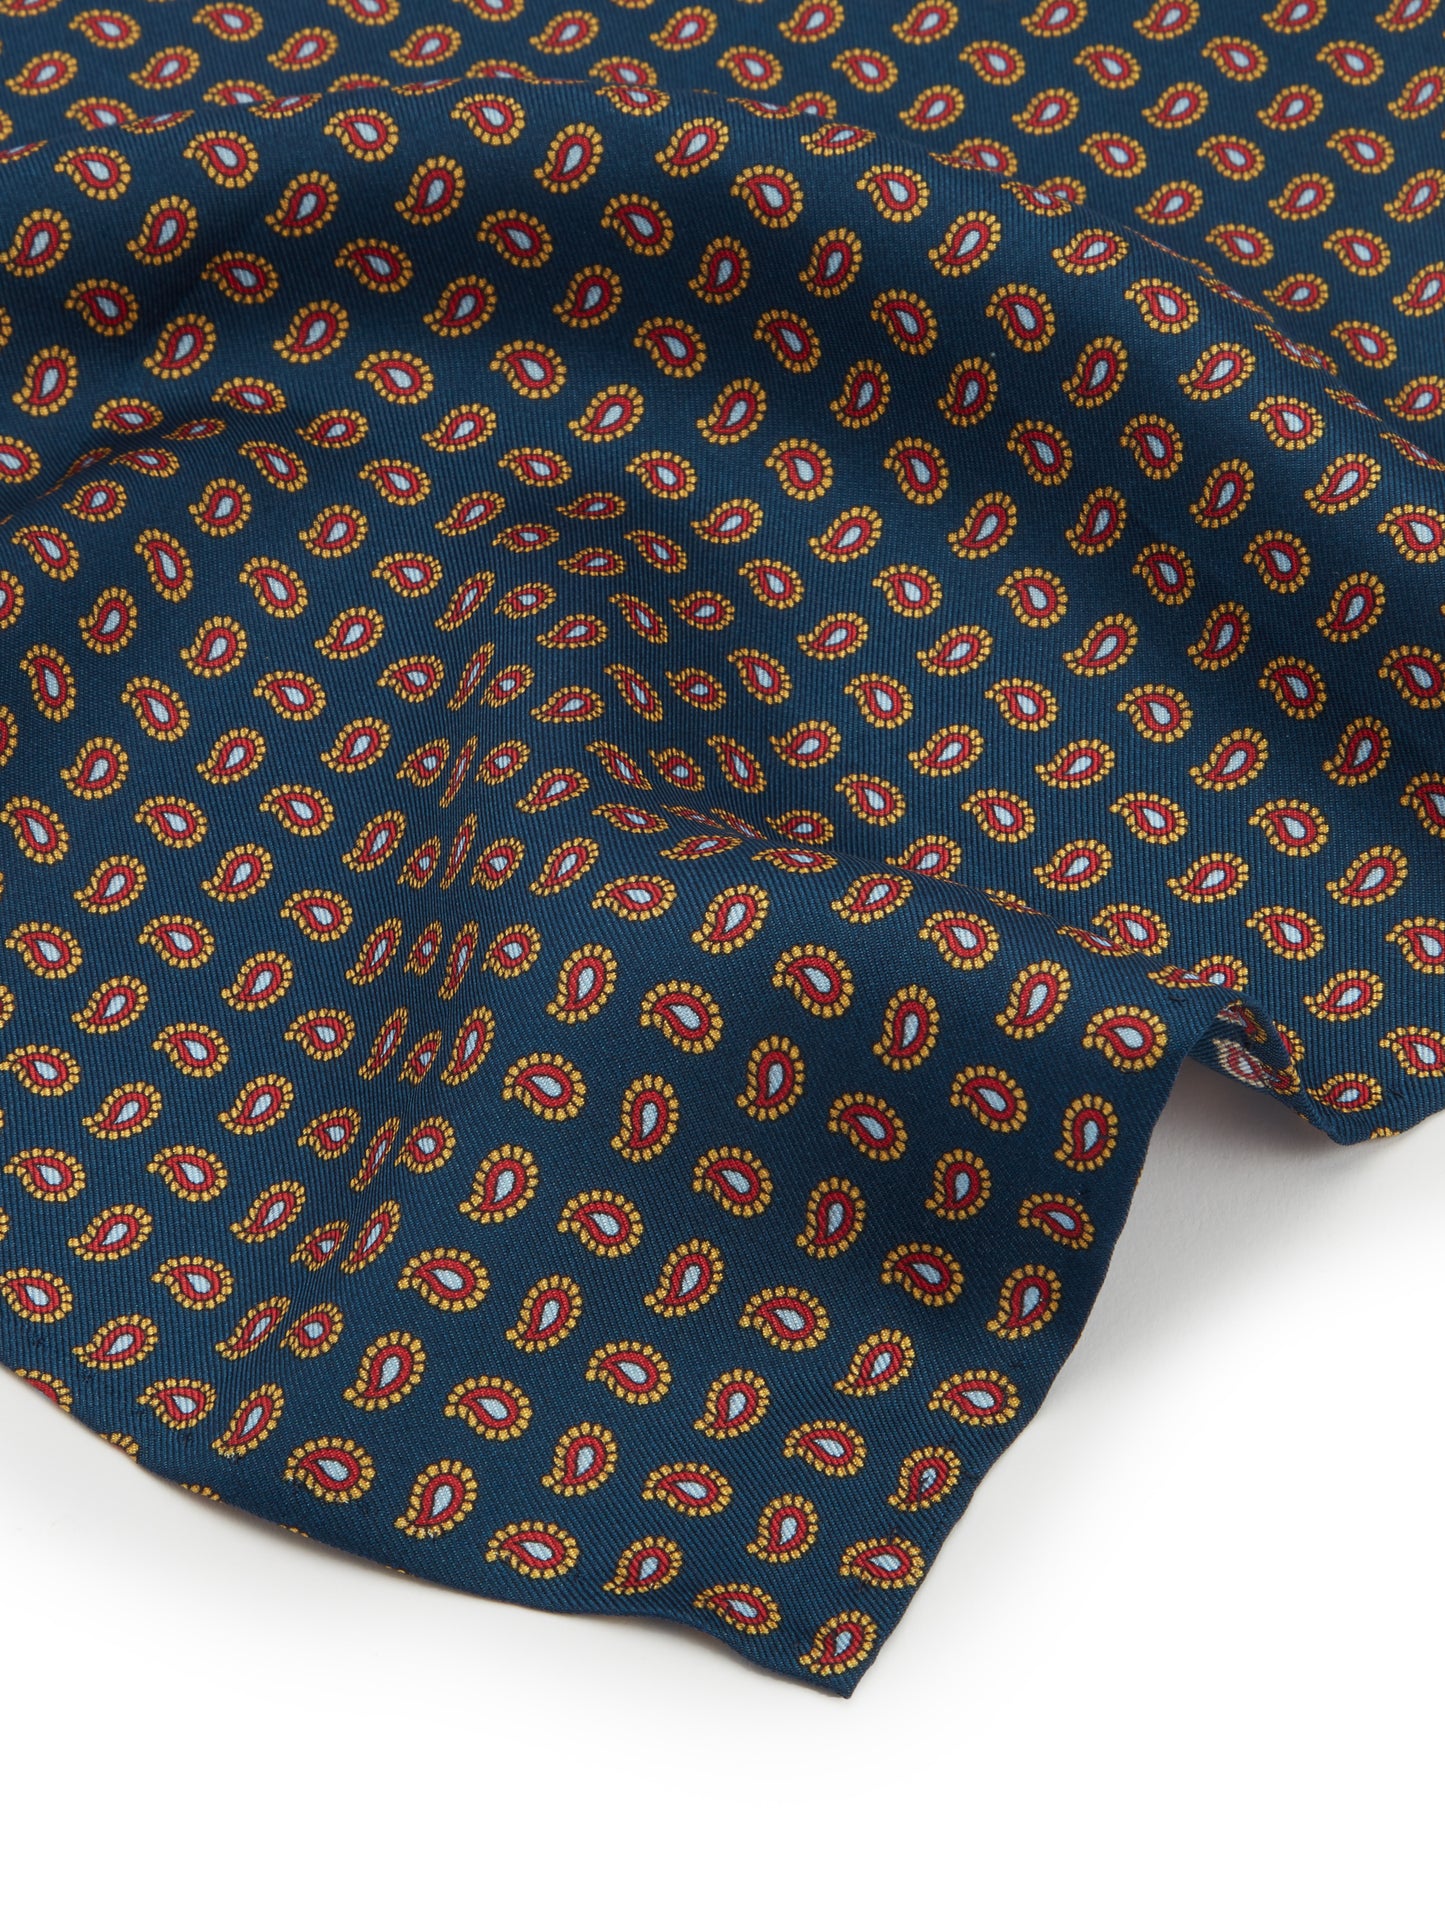 Paisley Design Handkerchief - Navy